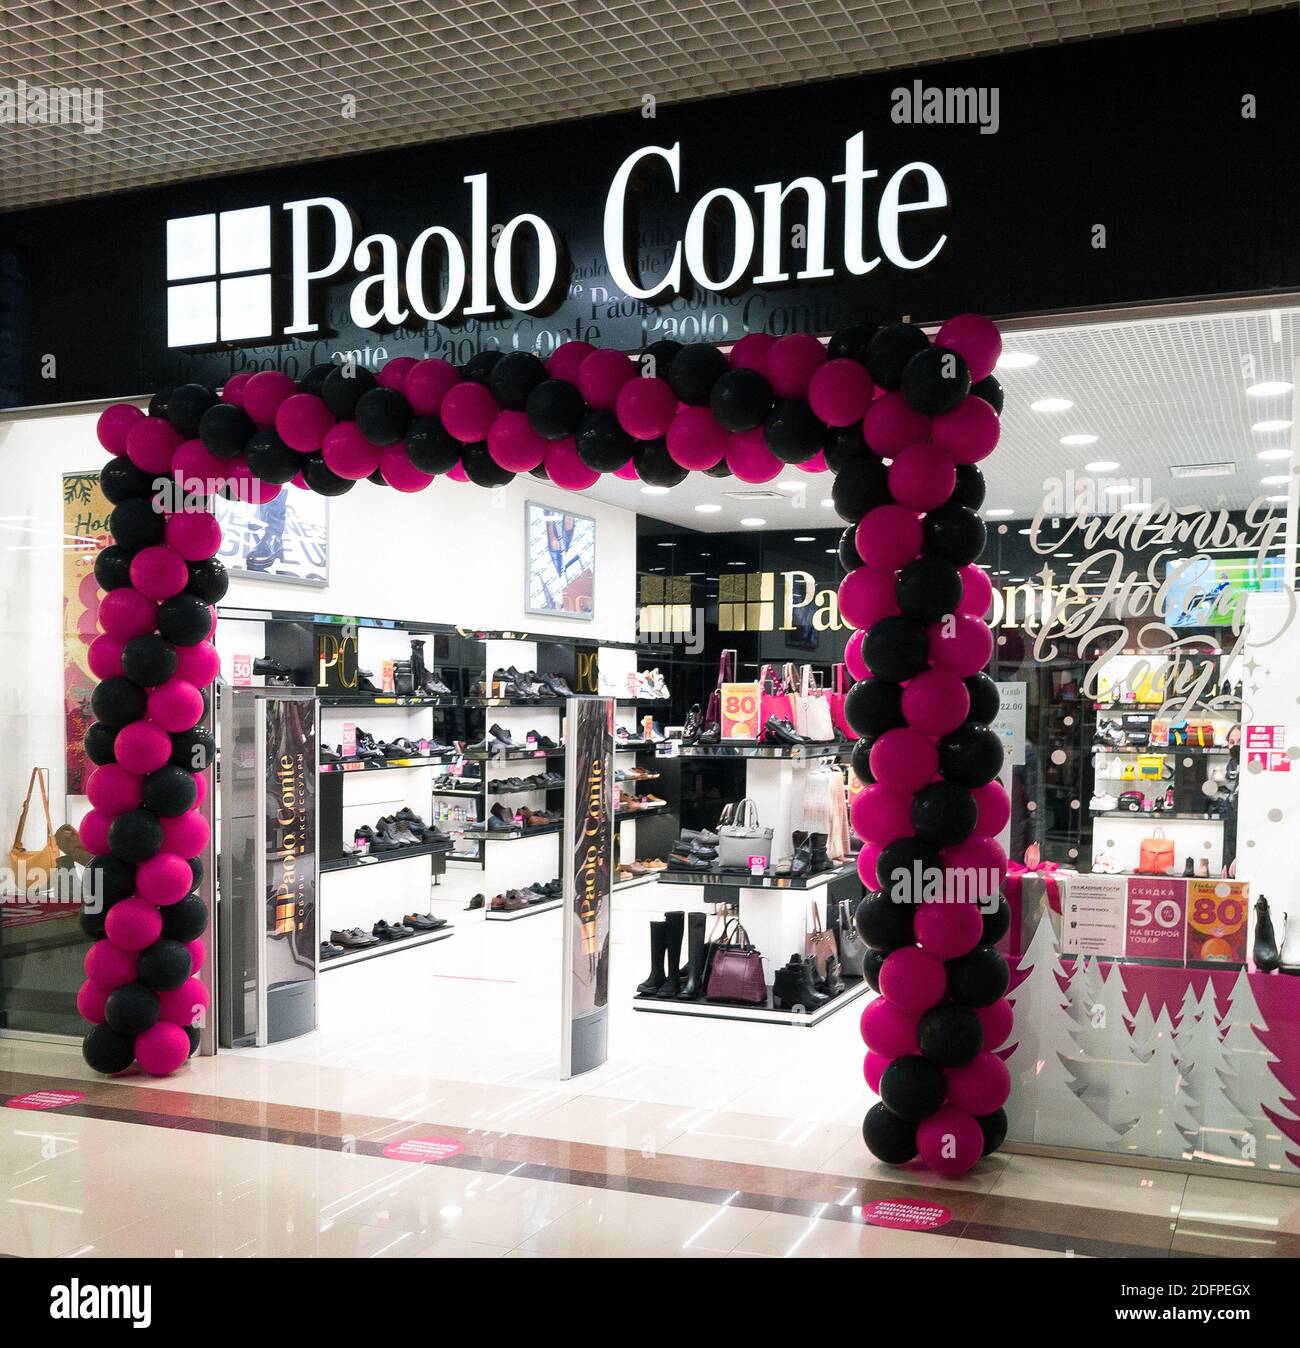 2020: Paolo Conte zapato boutique abierto en un centro comercial Fotografía  de stock - Alamy